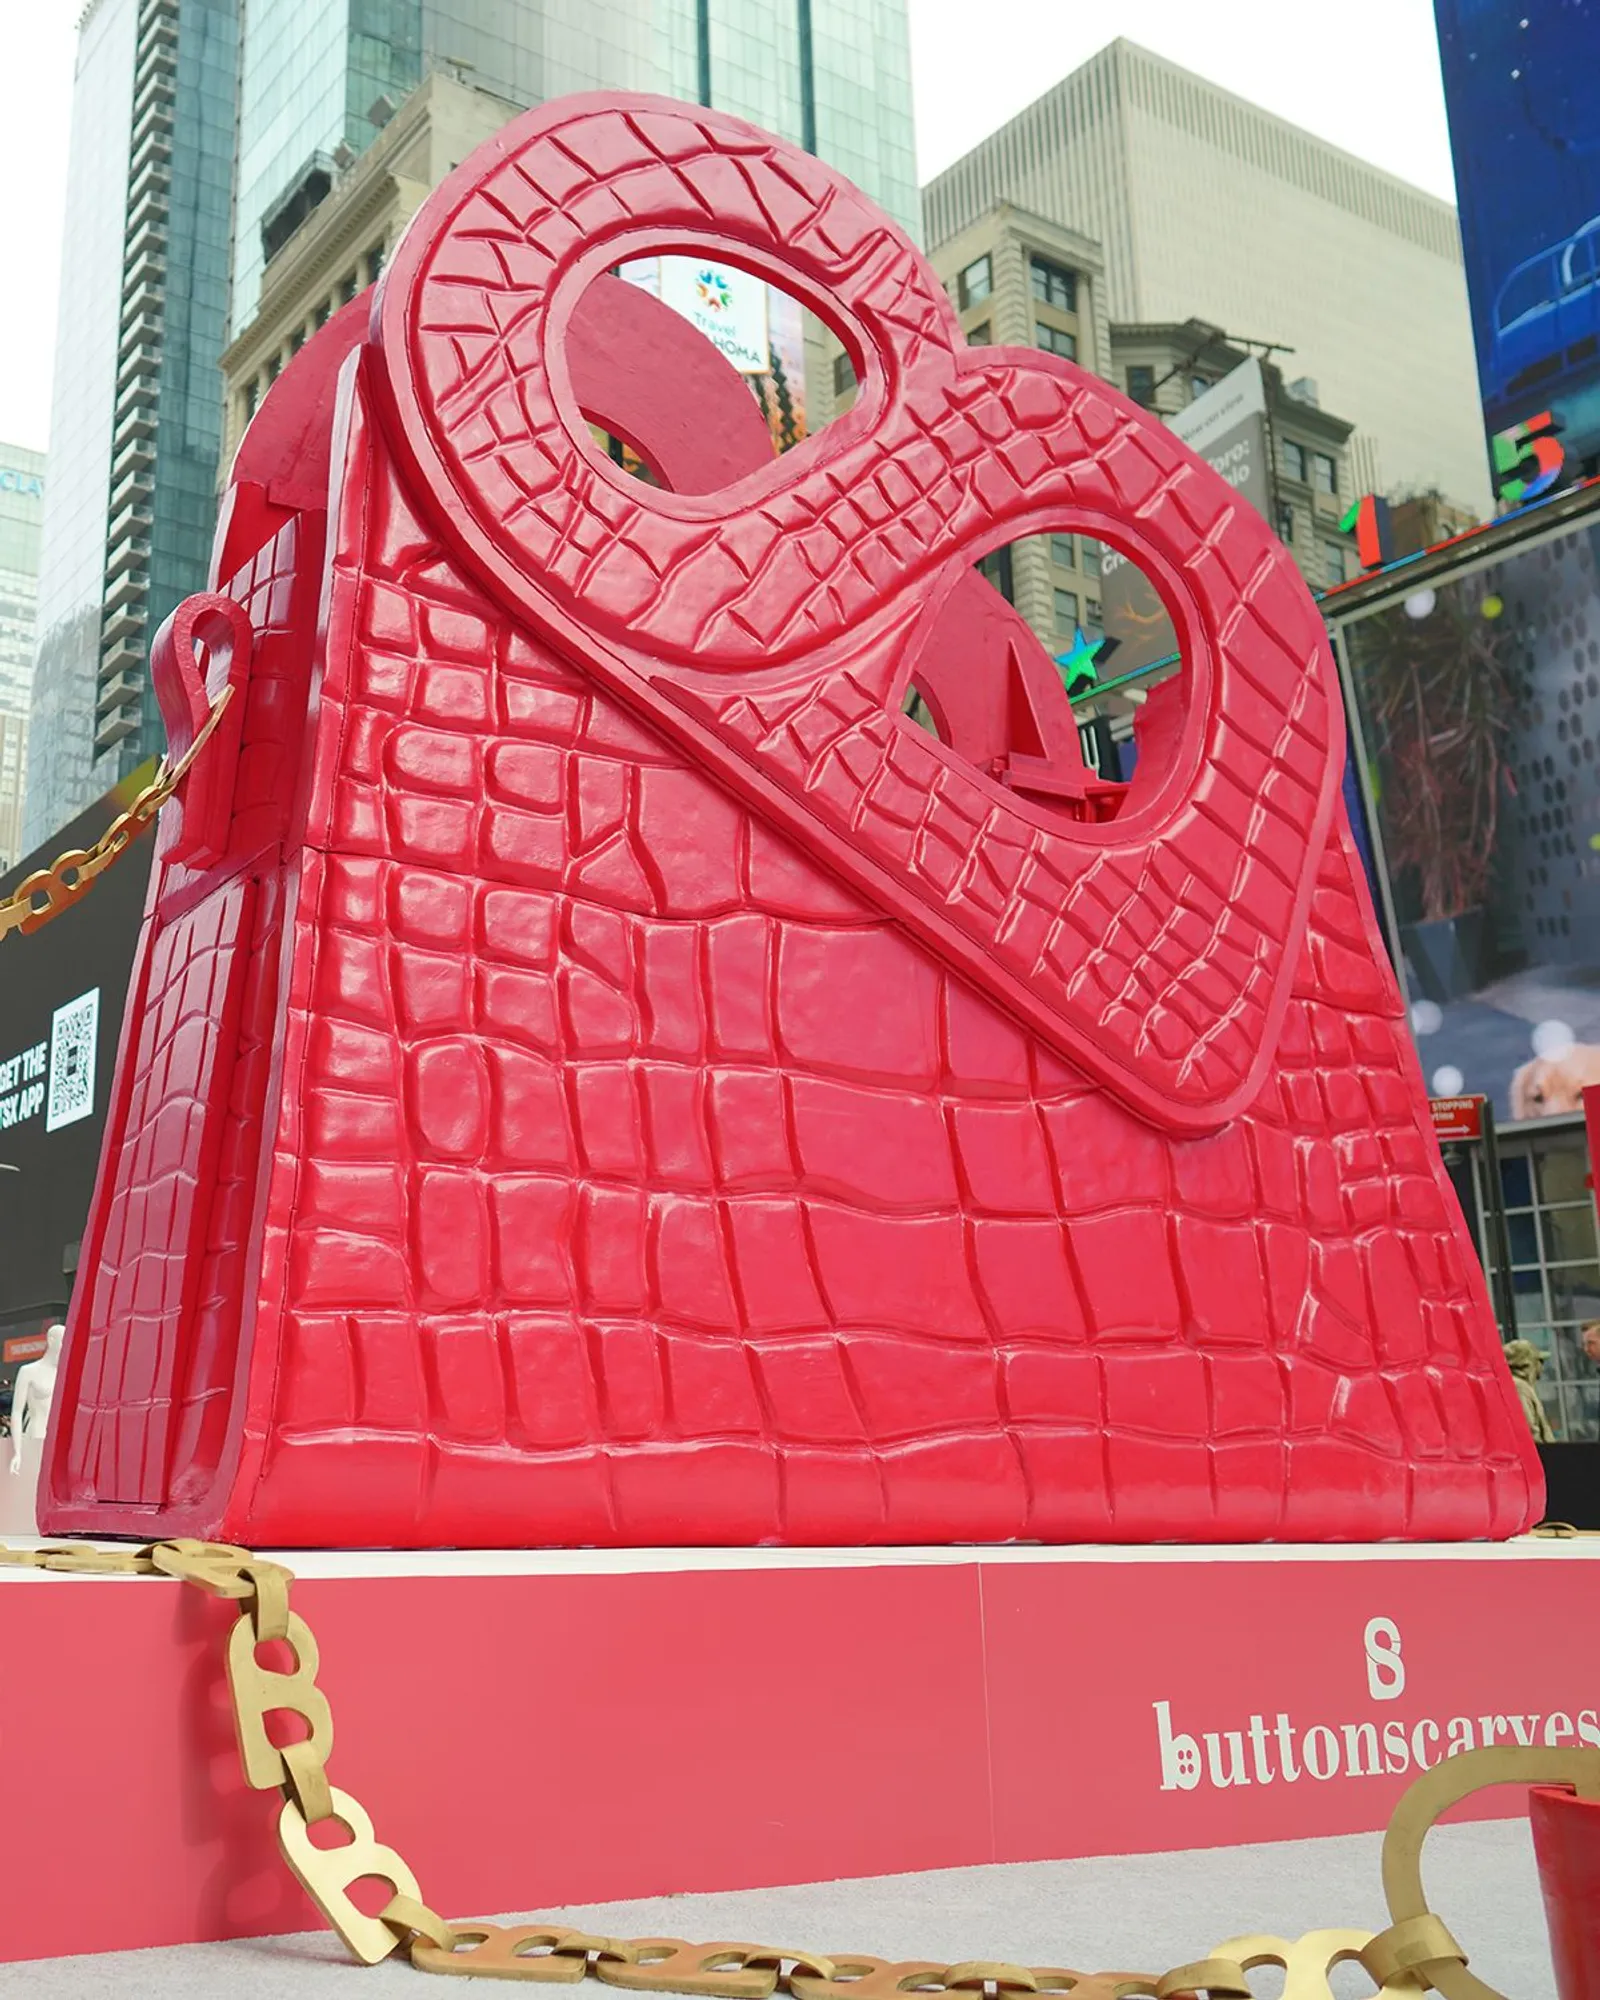 Buttonscarves Bangun 'Tas Raksasa' di Tengah Times Square New York